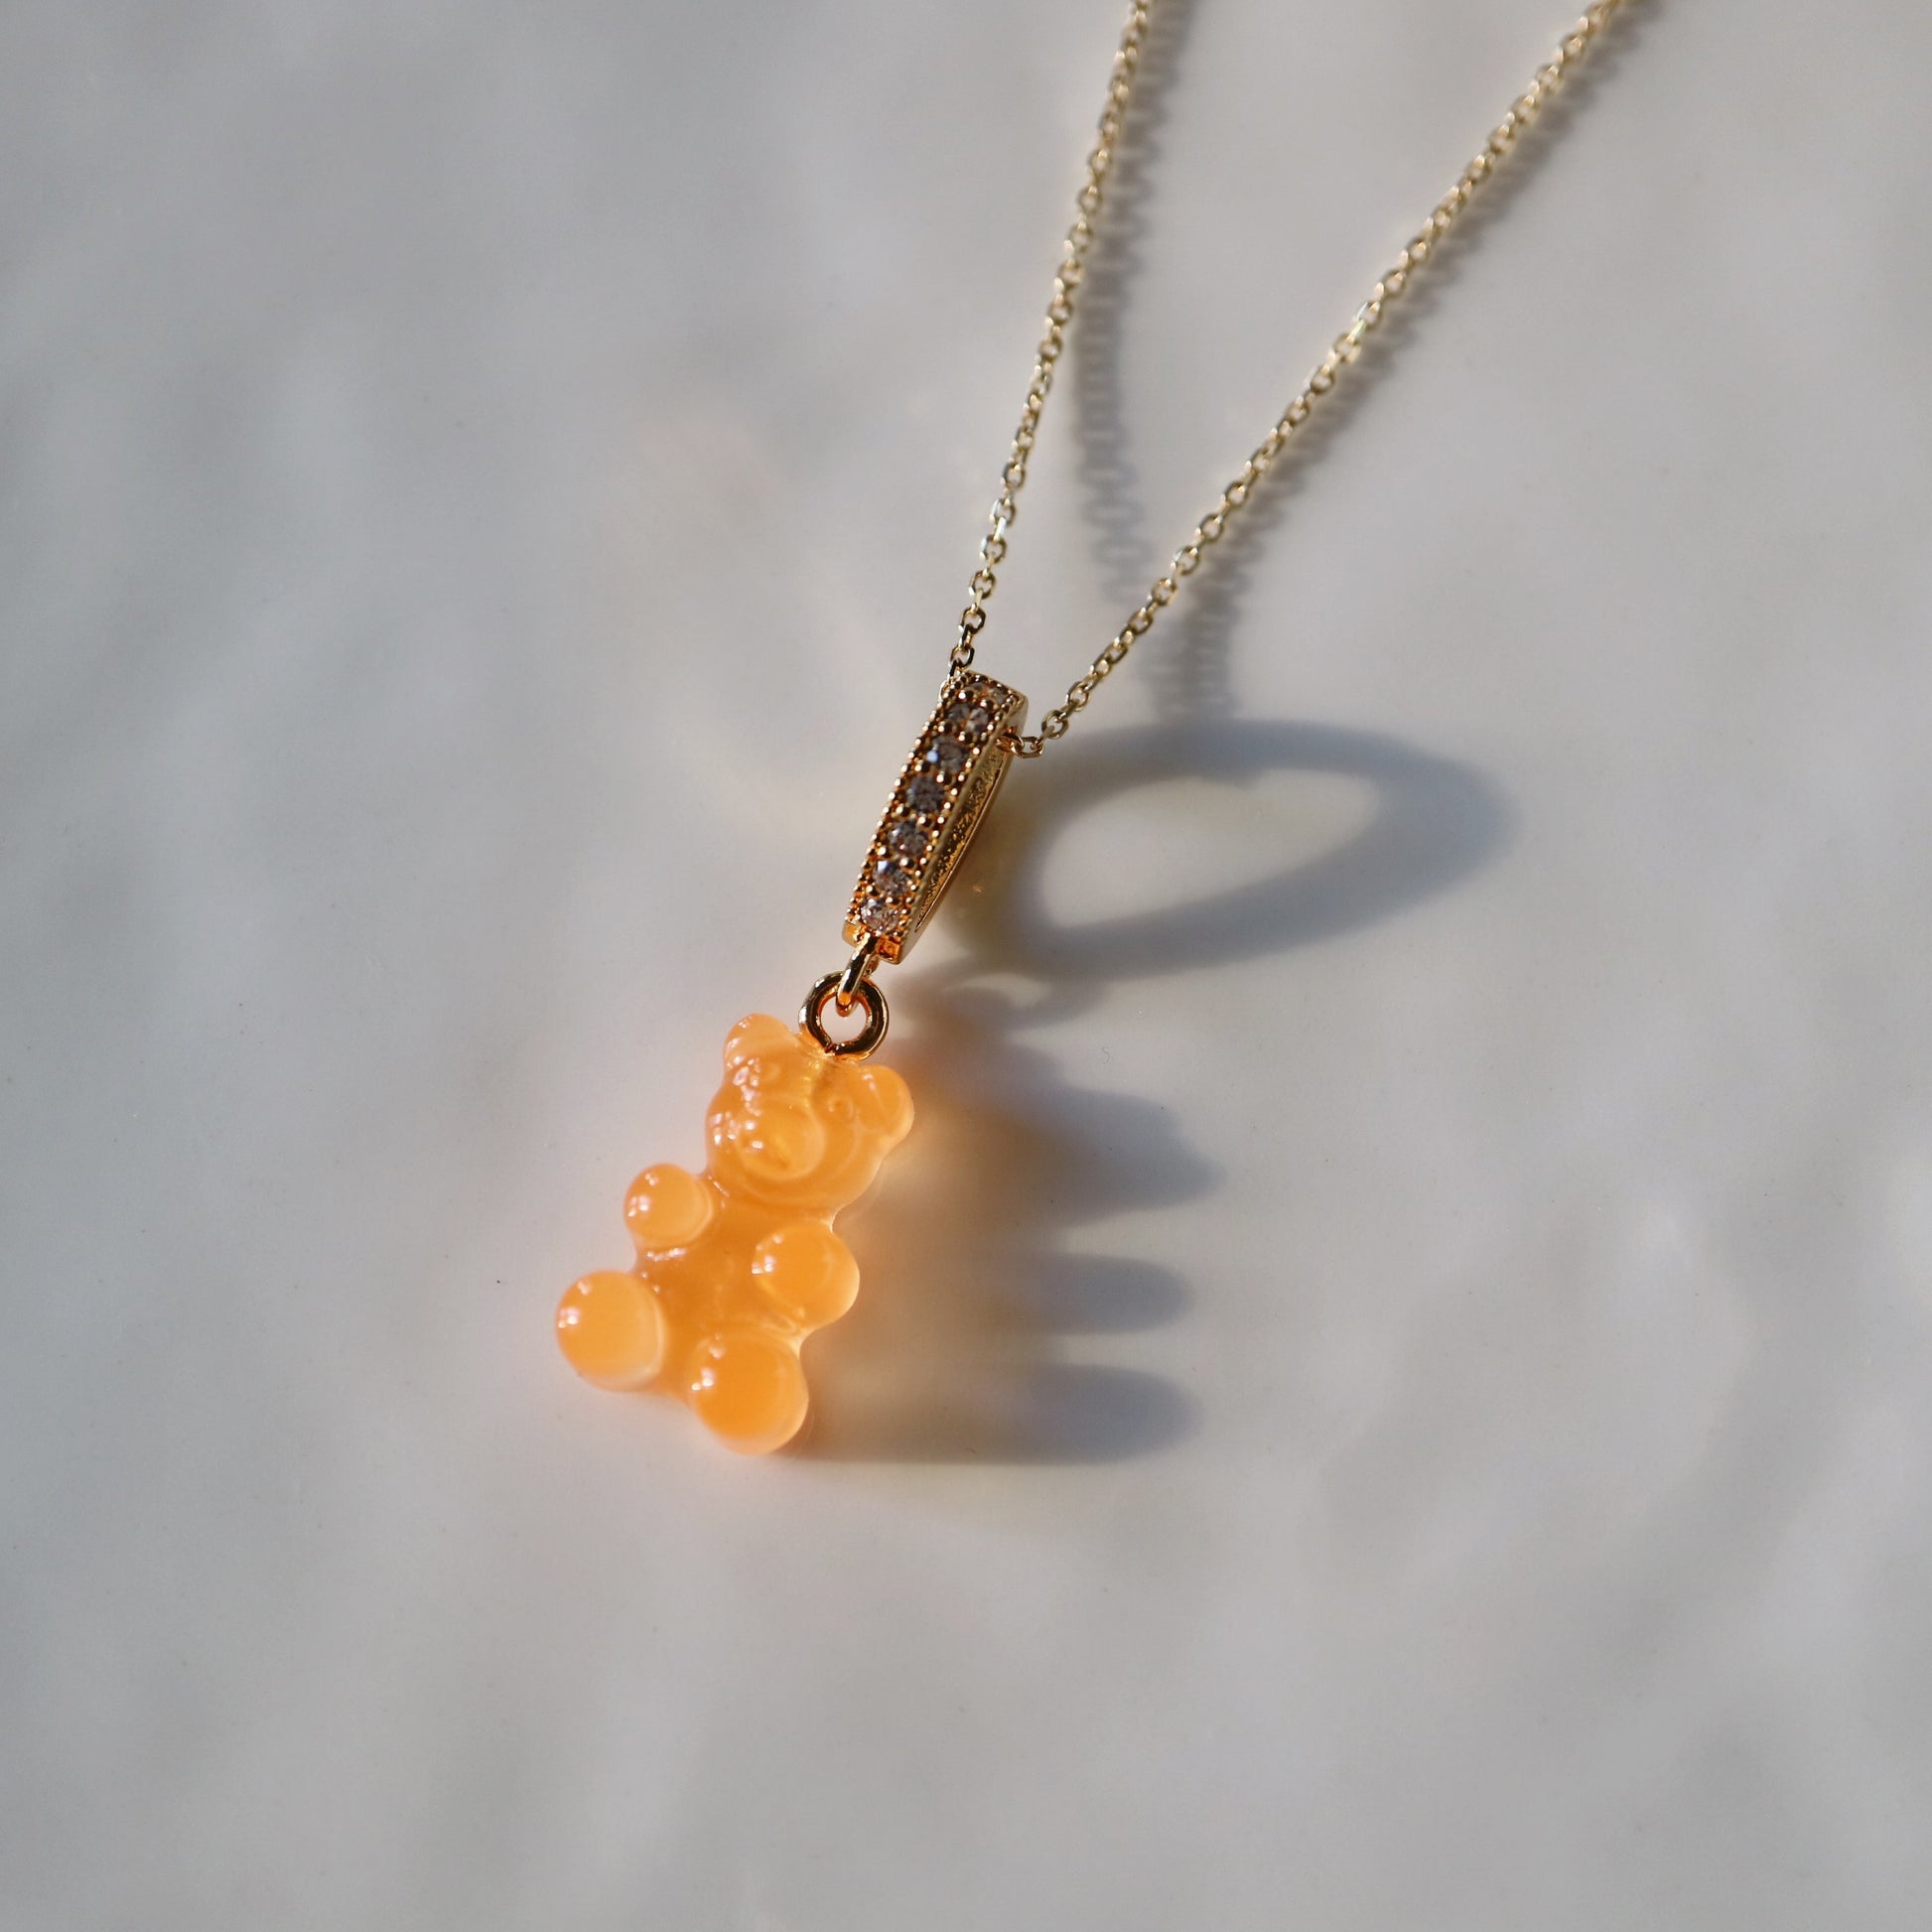 Gummy bear charm necklace